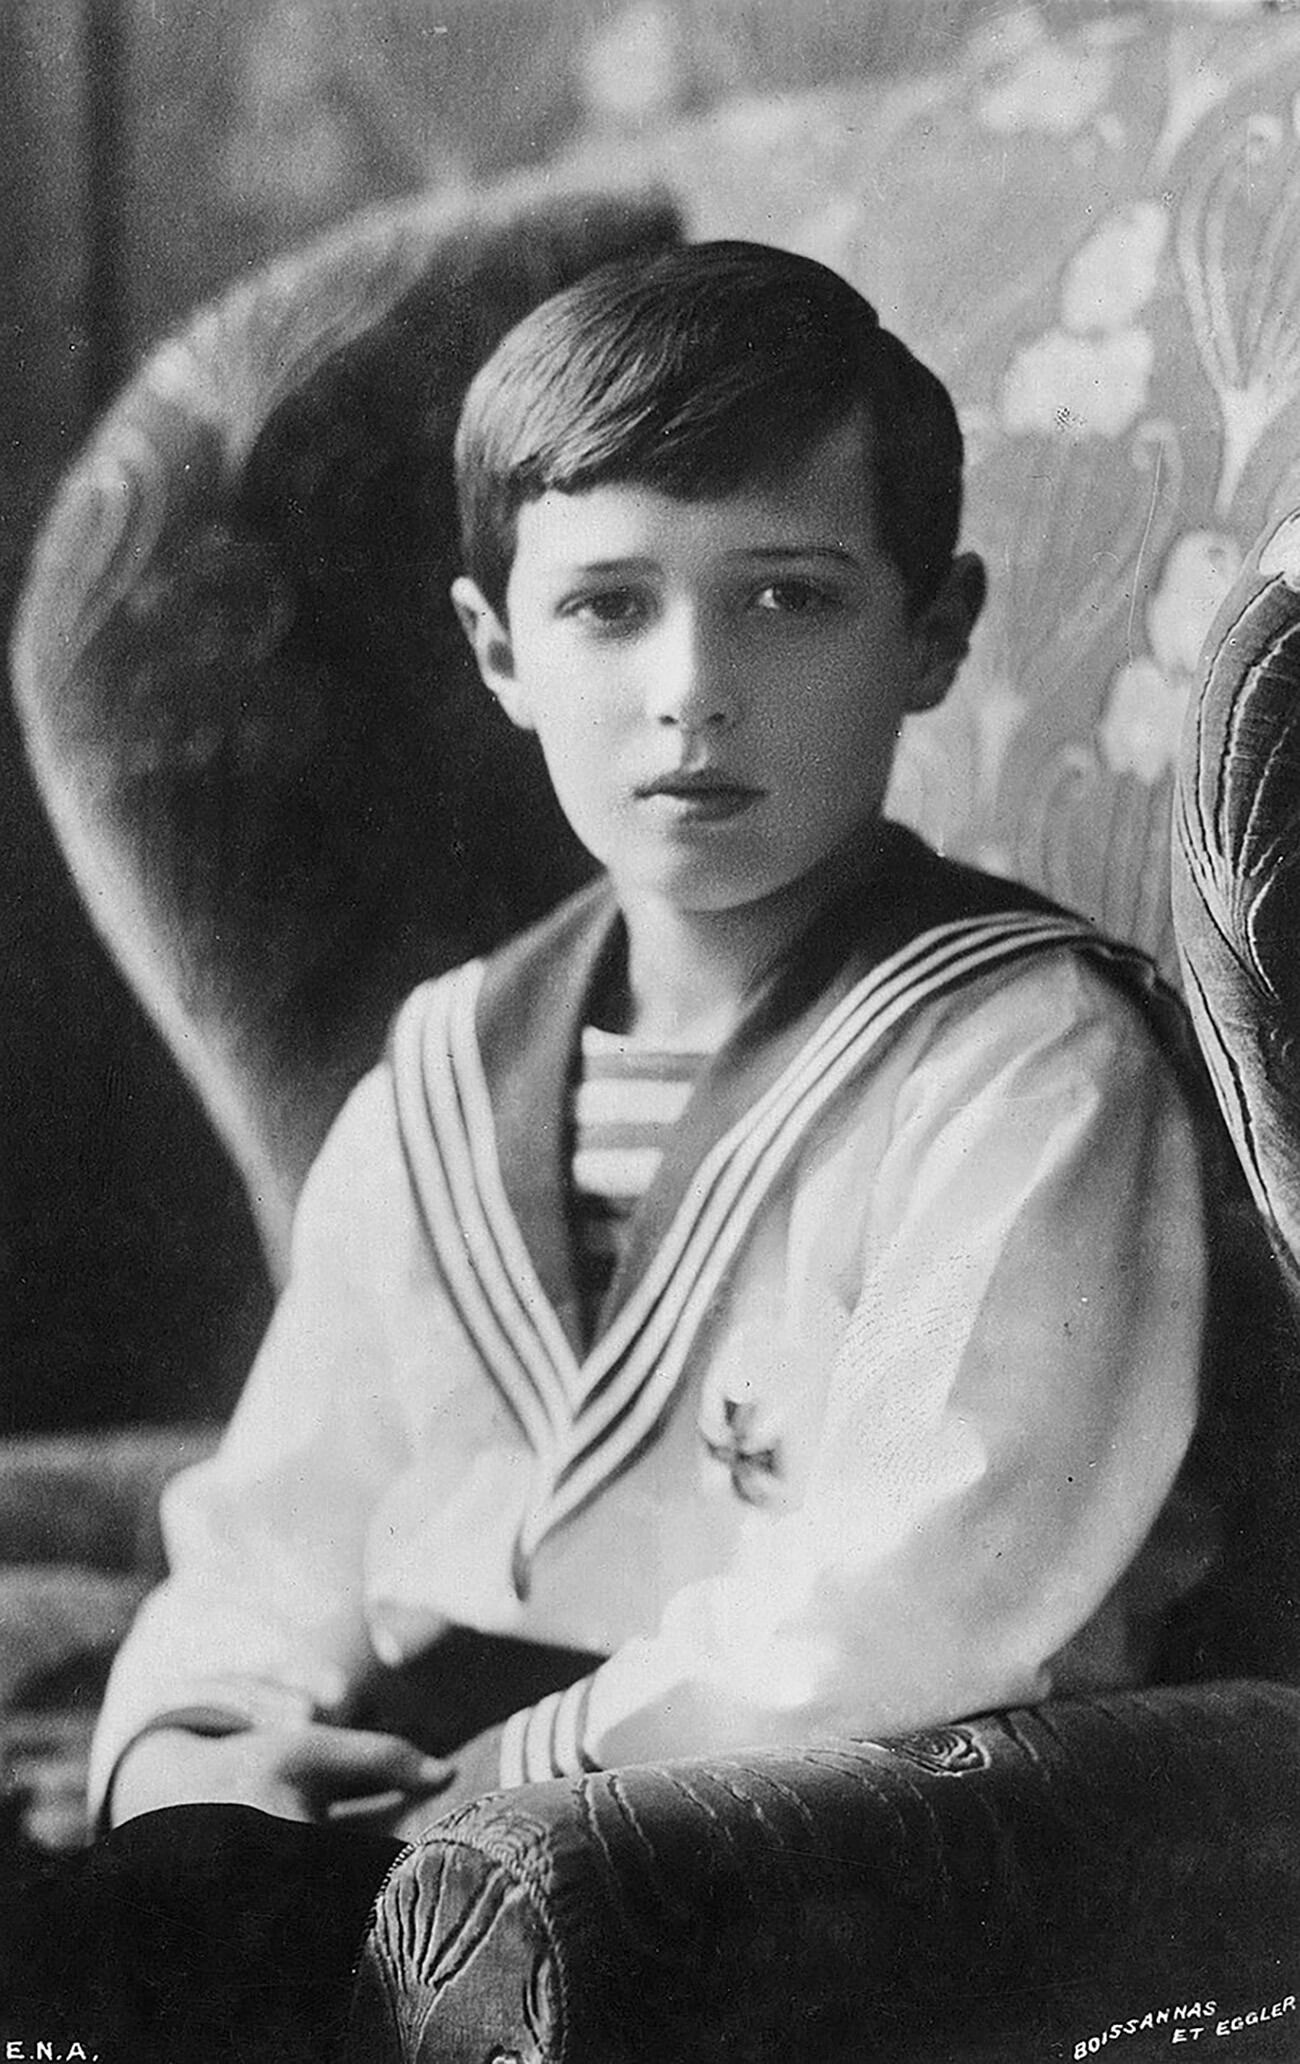 Lo zarevich Aleksej Romanov (1904-1918)

